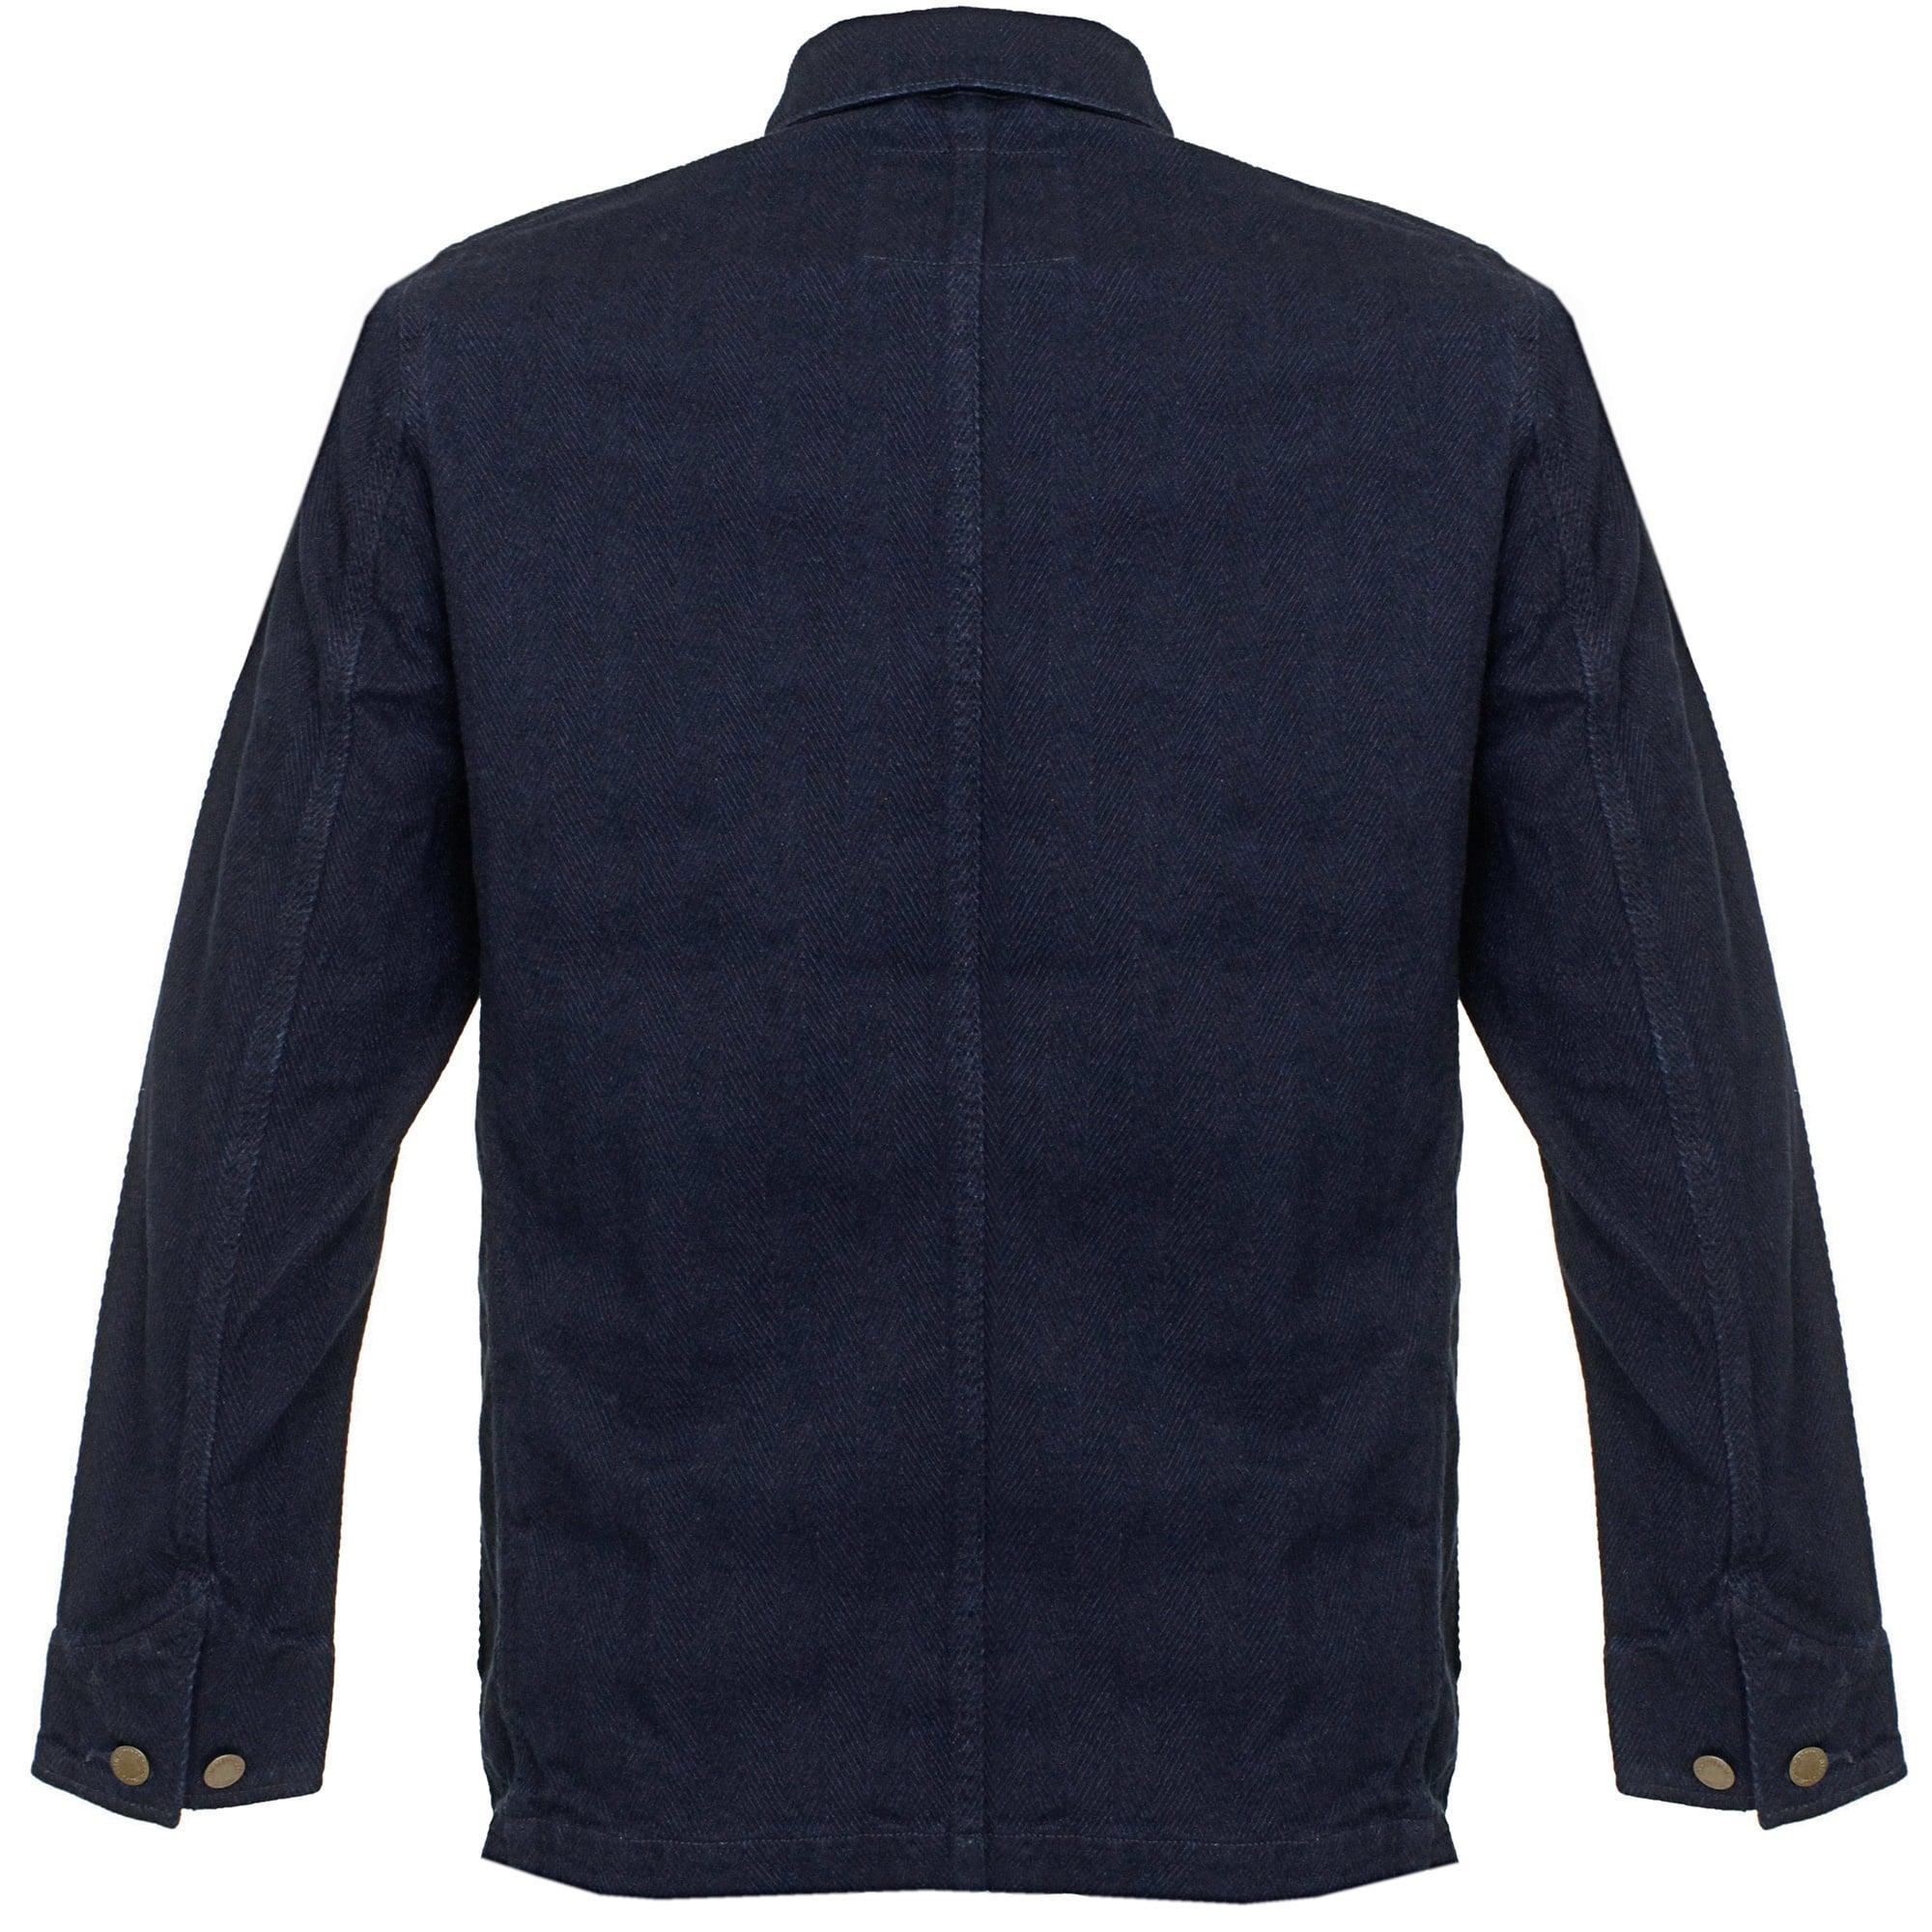 Lyst - Levi'S Levi's Engineer's Indigo Herringbone Jacket in Blue for Men